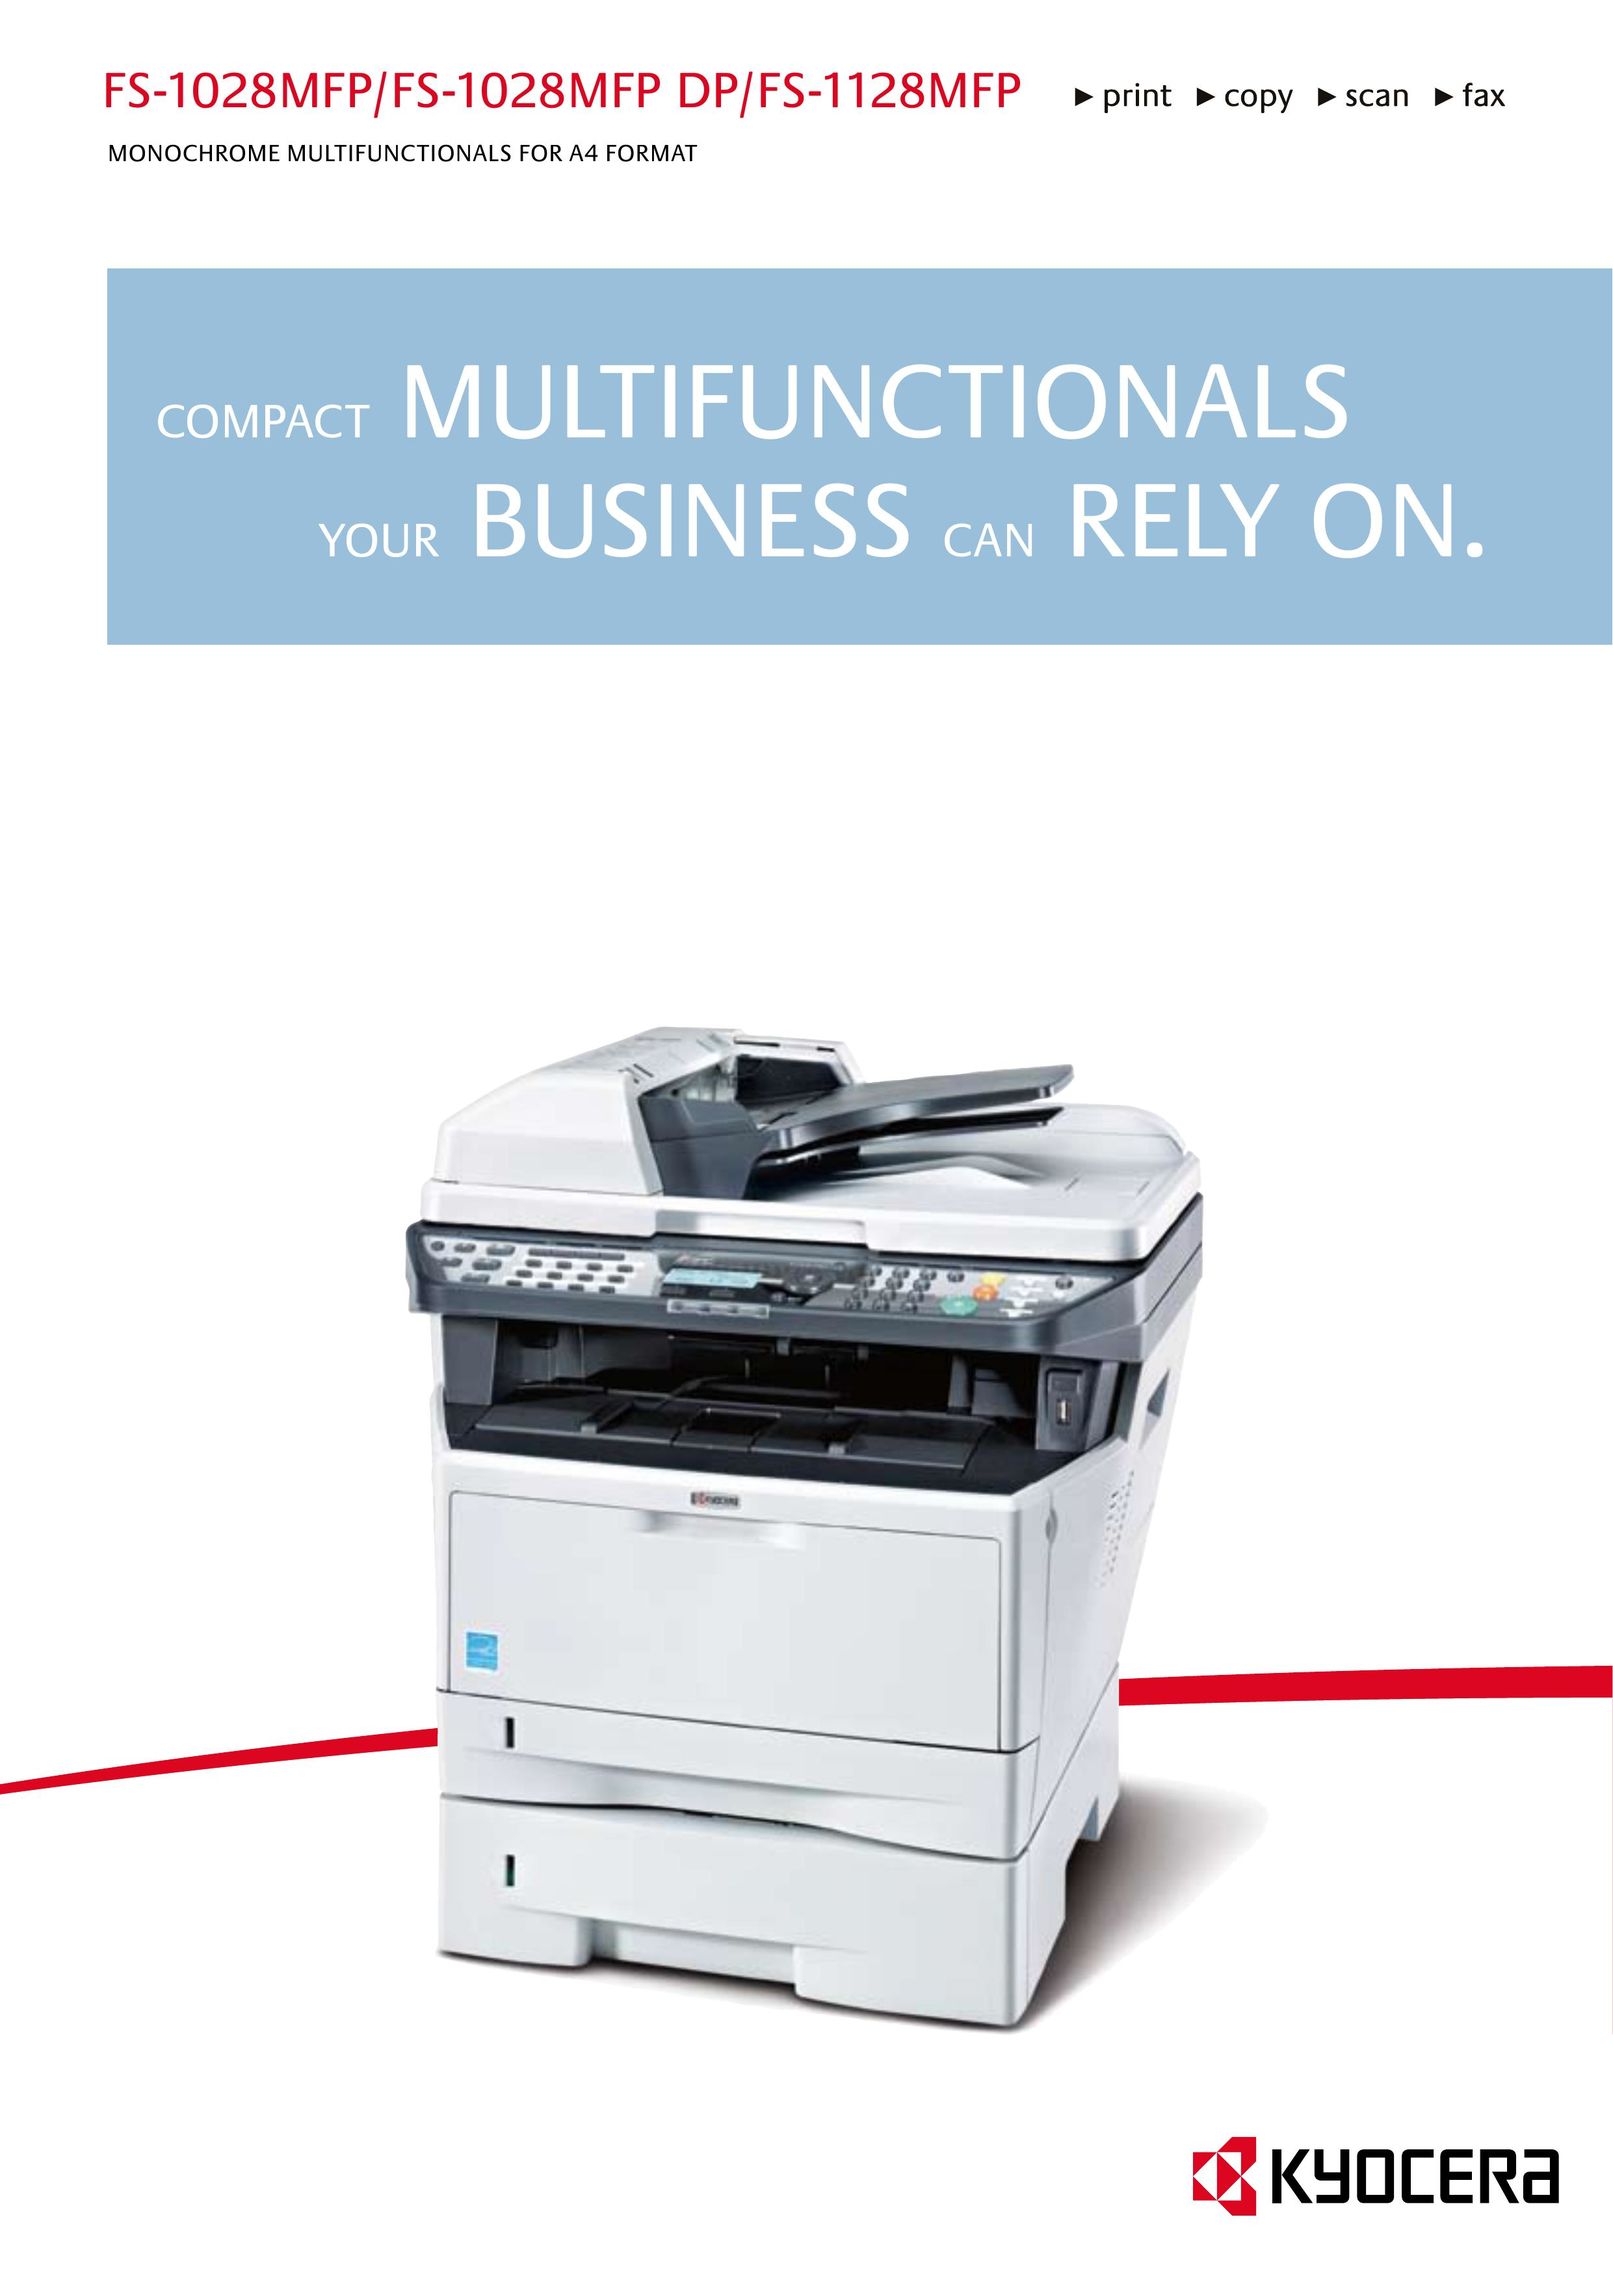 Kyocera FS-1028MFP DP All in One Printer User Manual